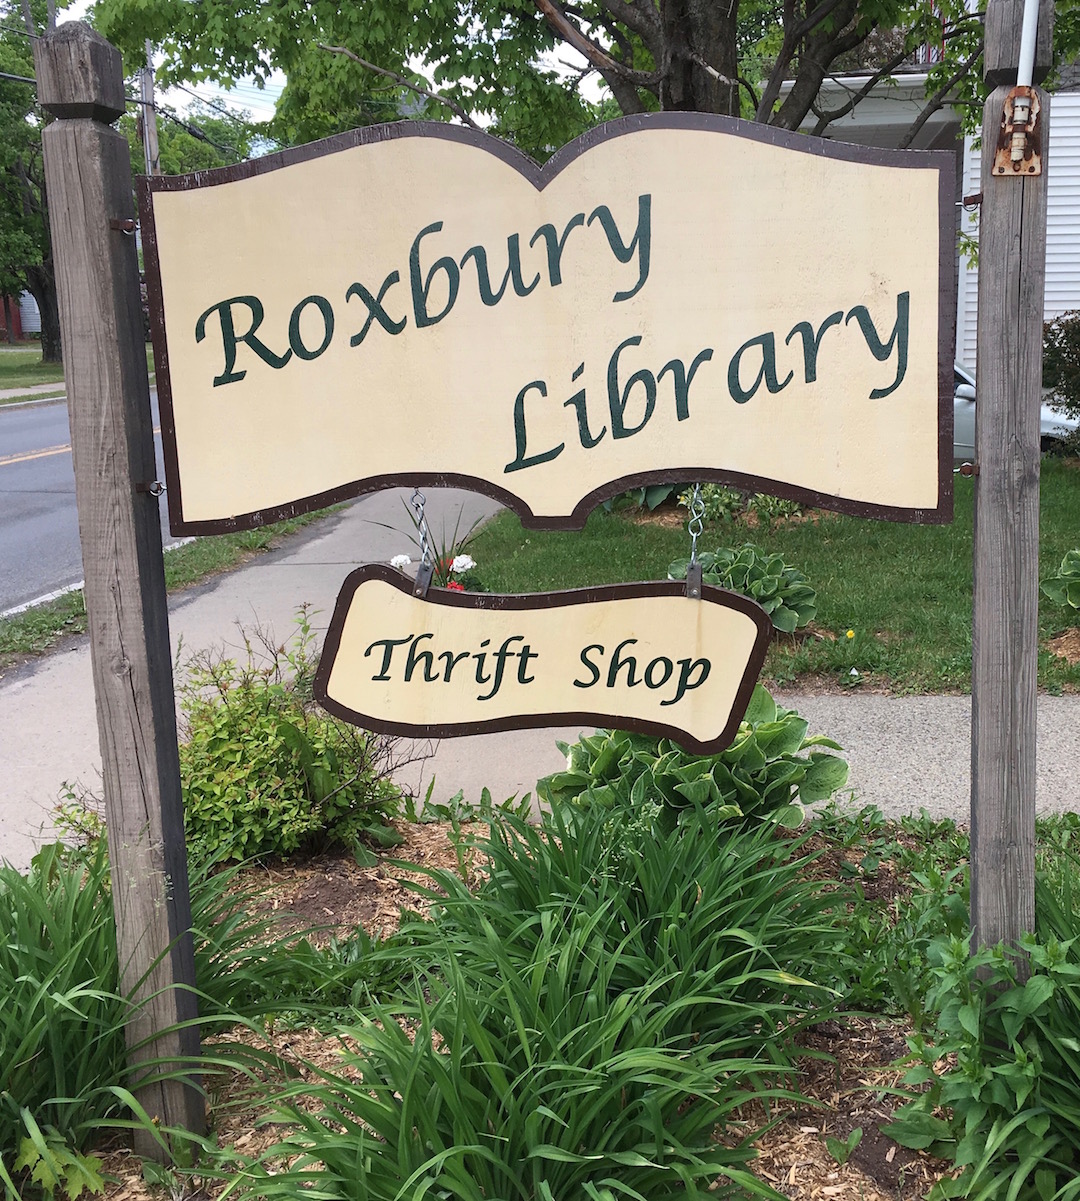 Roxbury Library